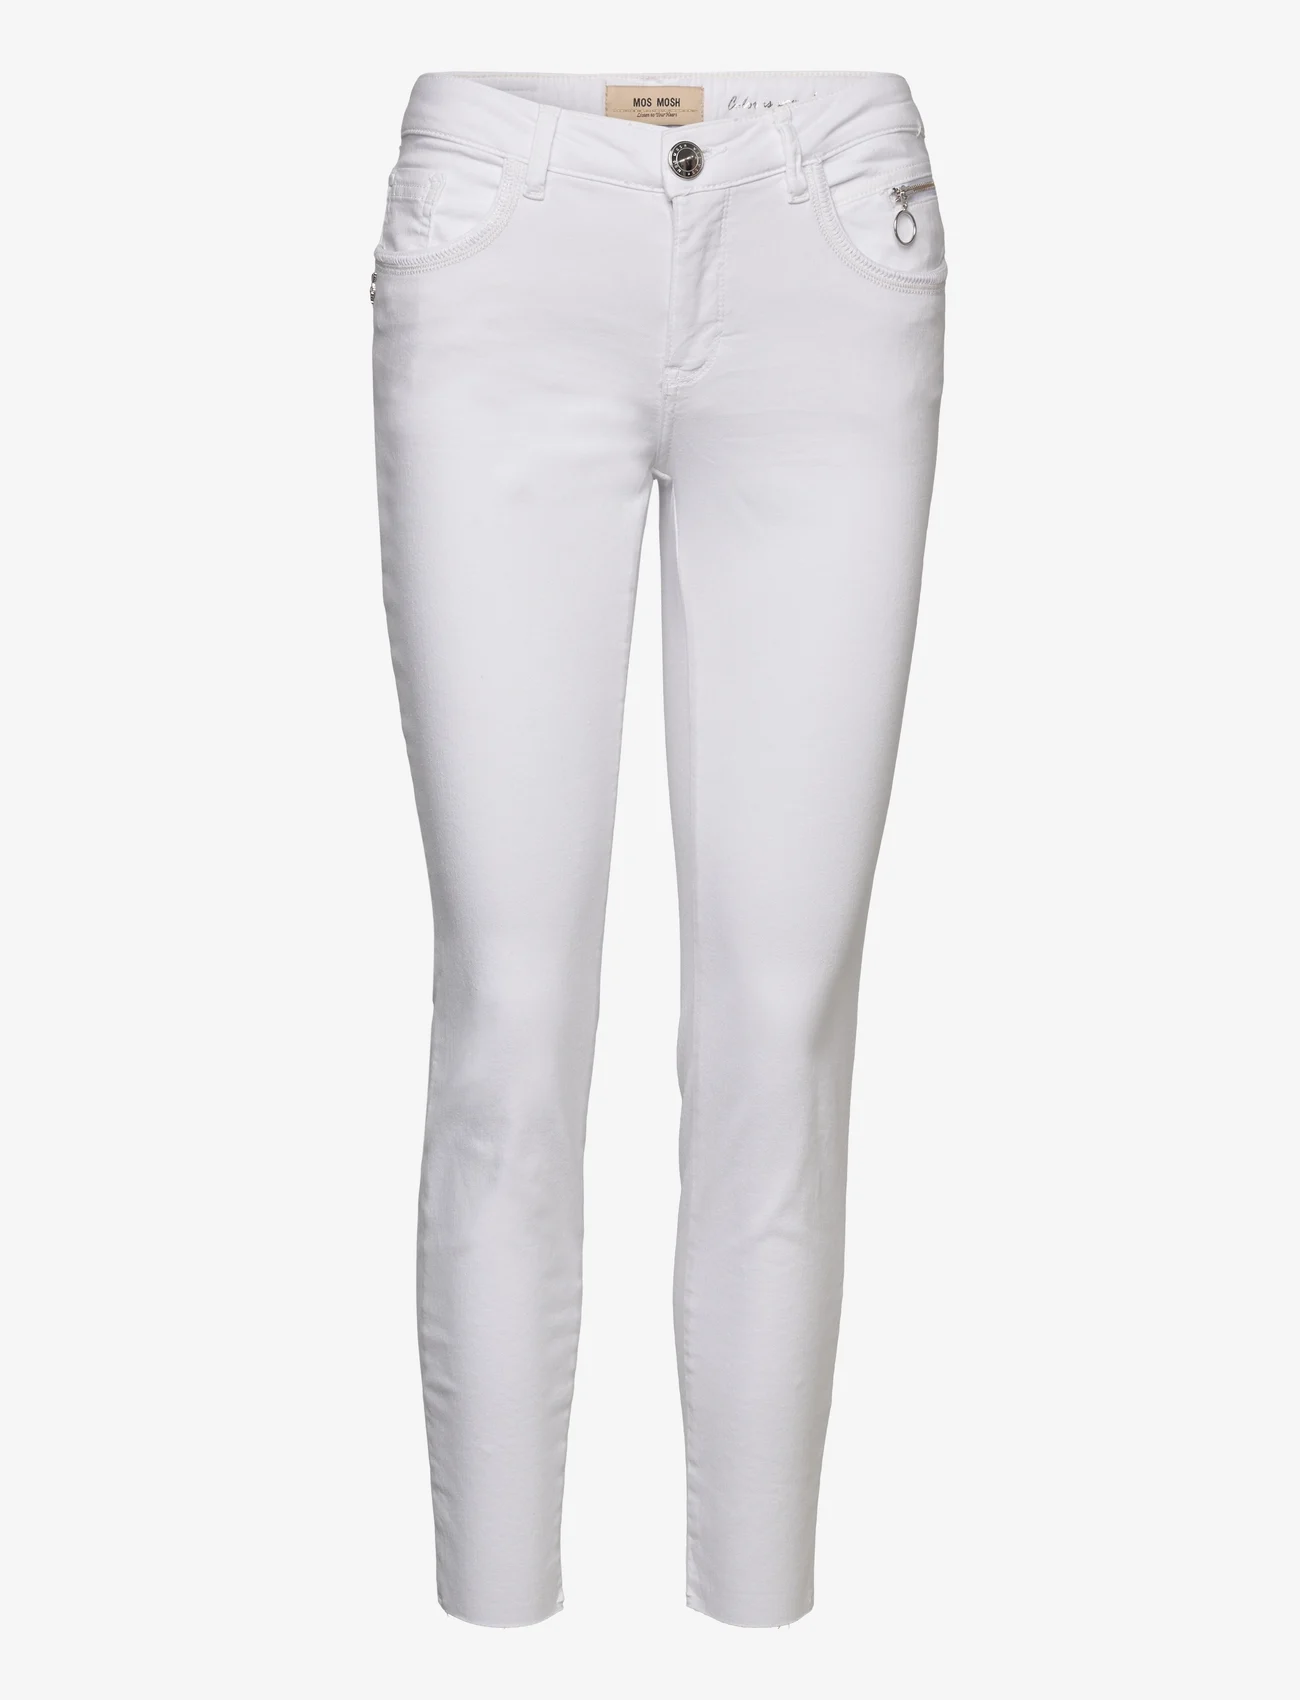 MOS MOSH - MMSumner Power Pant - slim fit jeans - white - 0